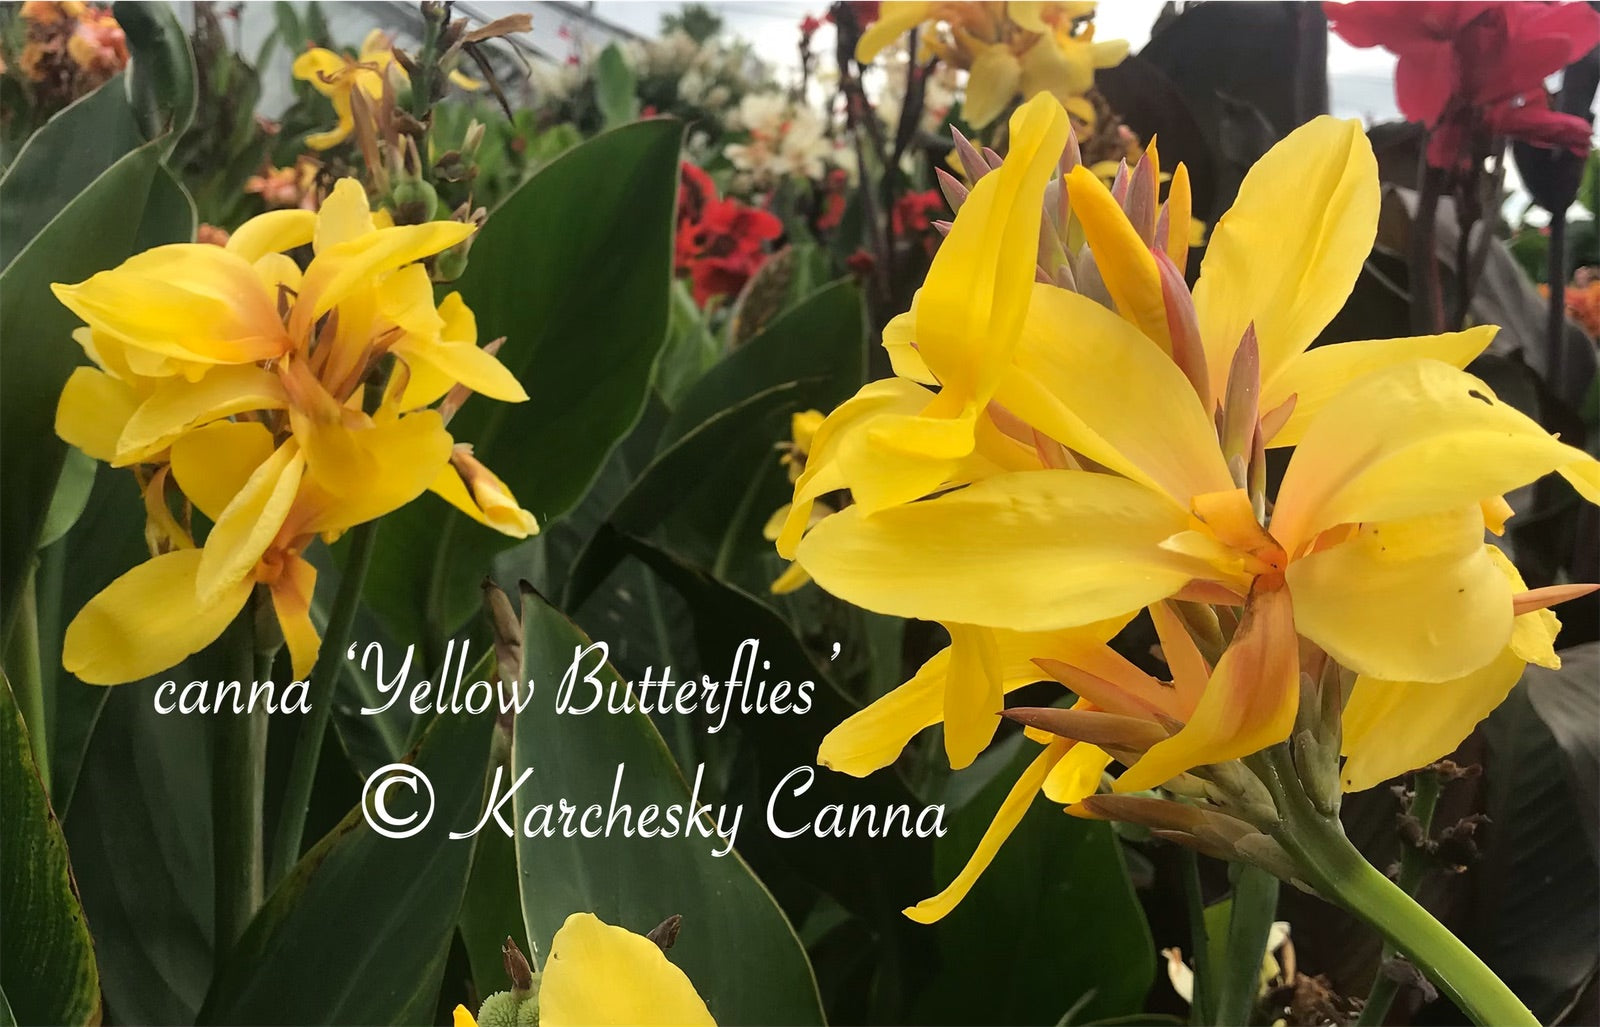 canna 'White Butterflies' – South Ridge Farm & Botanic Gardens